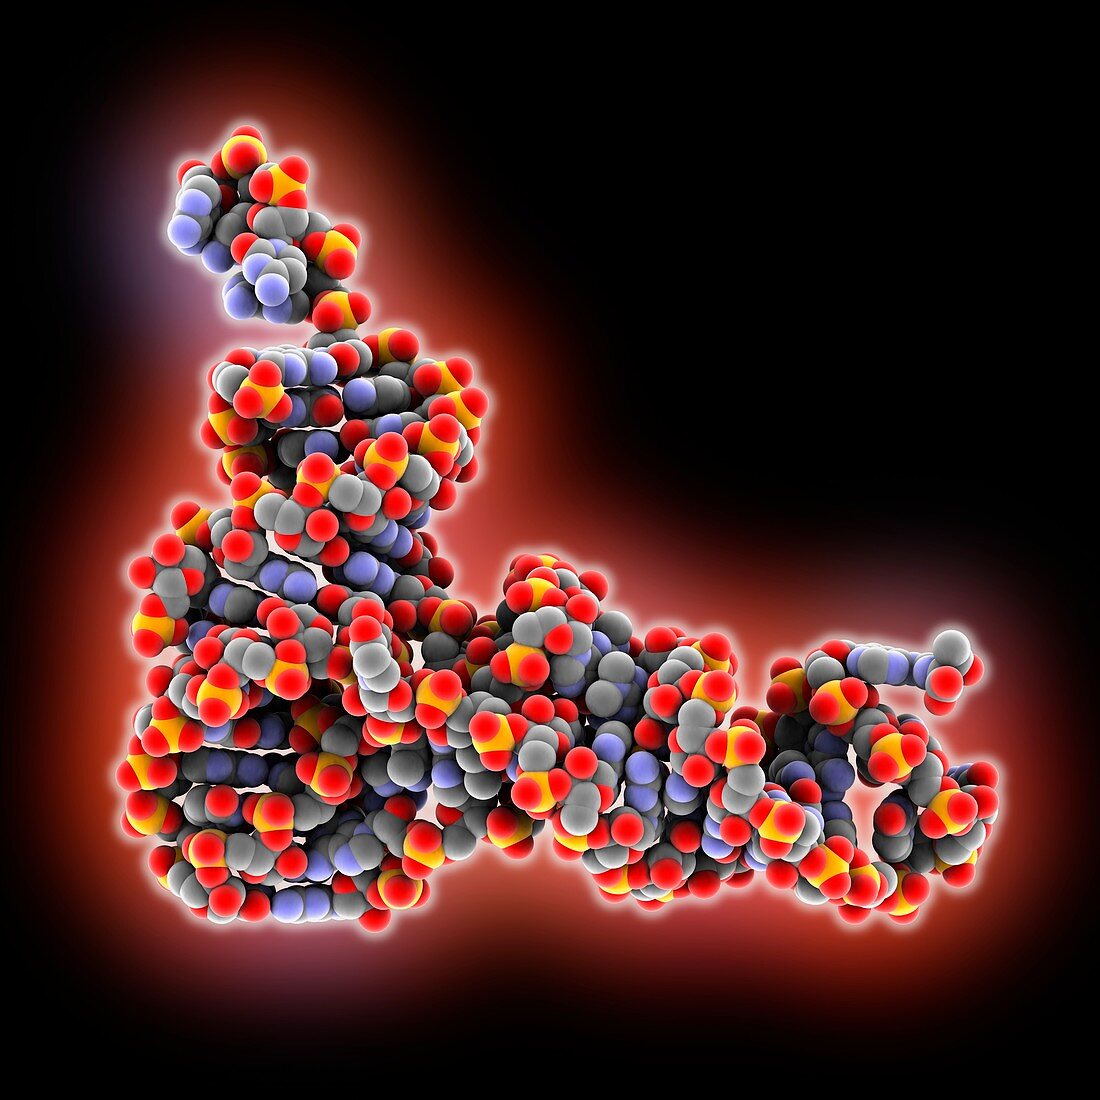 Yeast initiator tRNA molecule